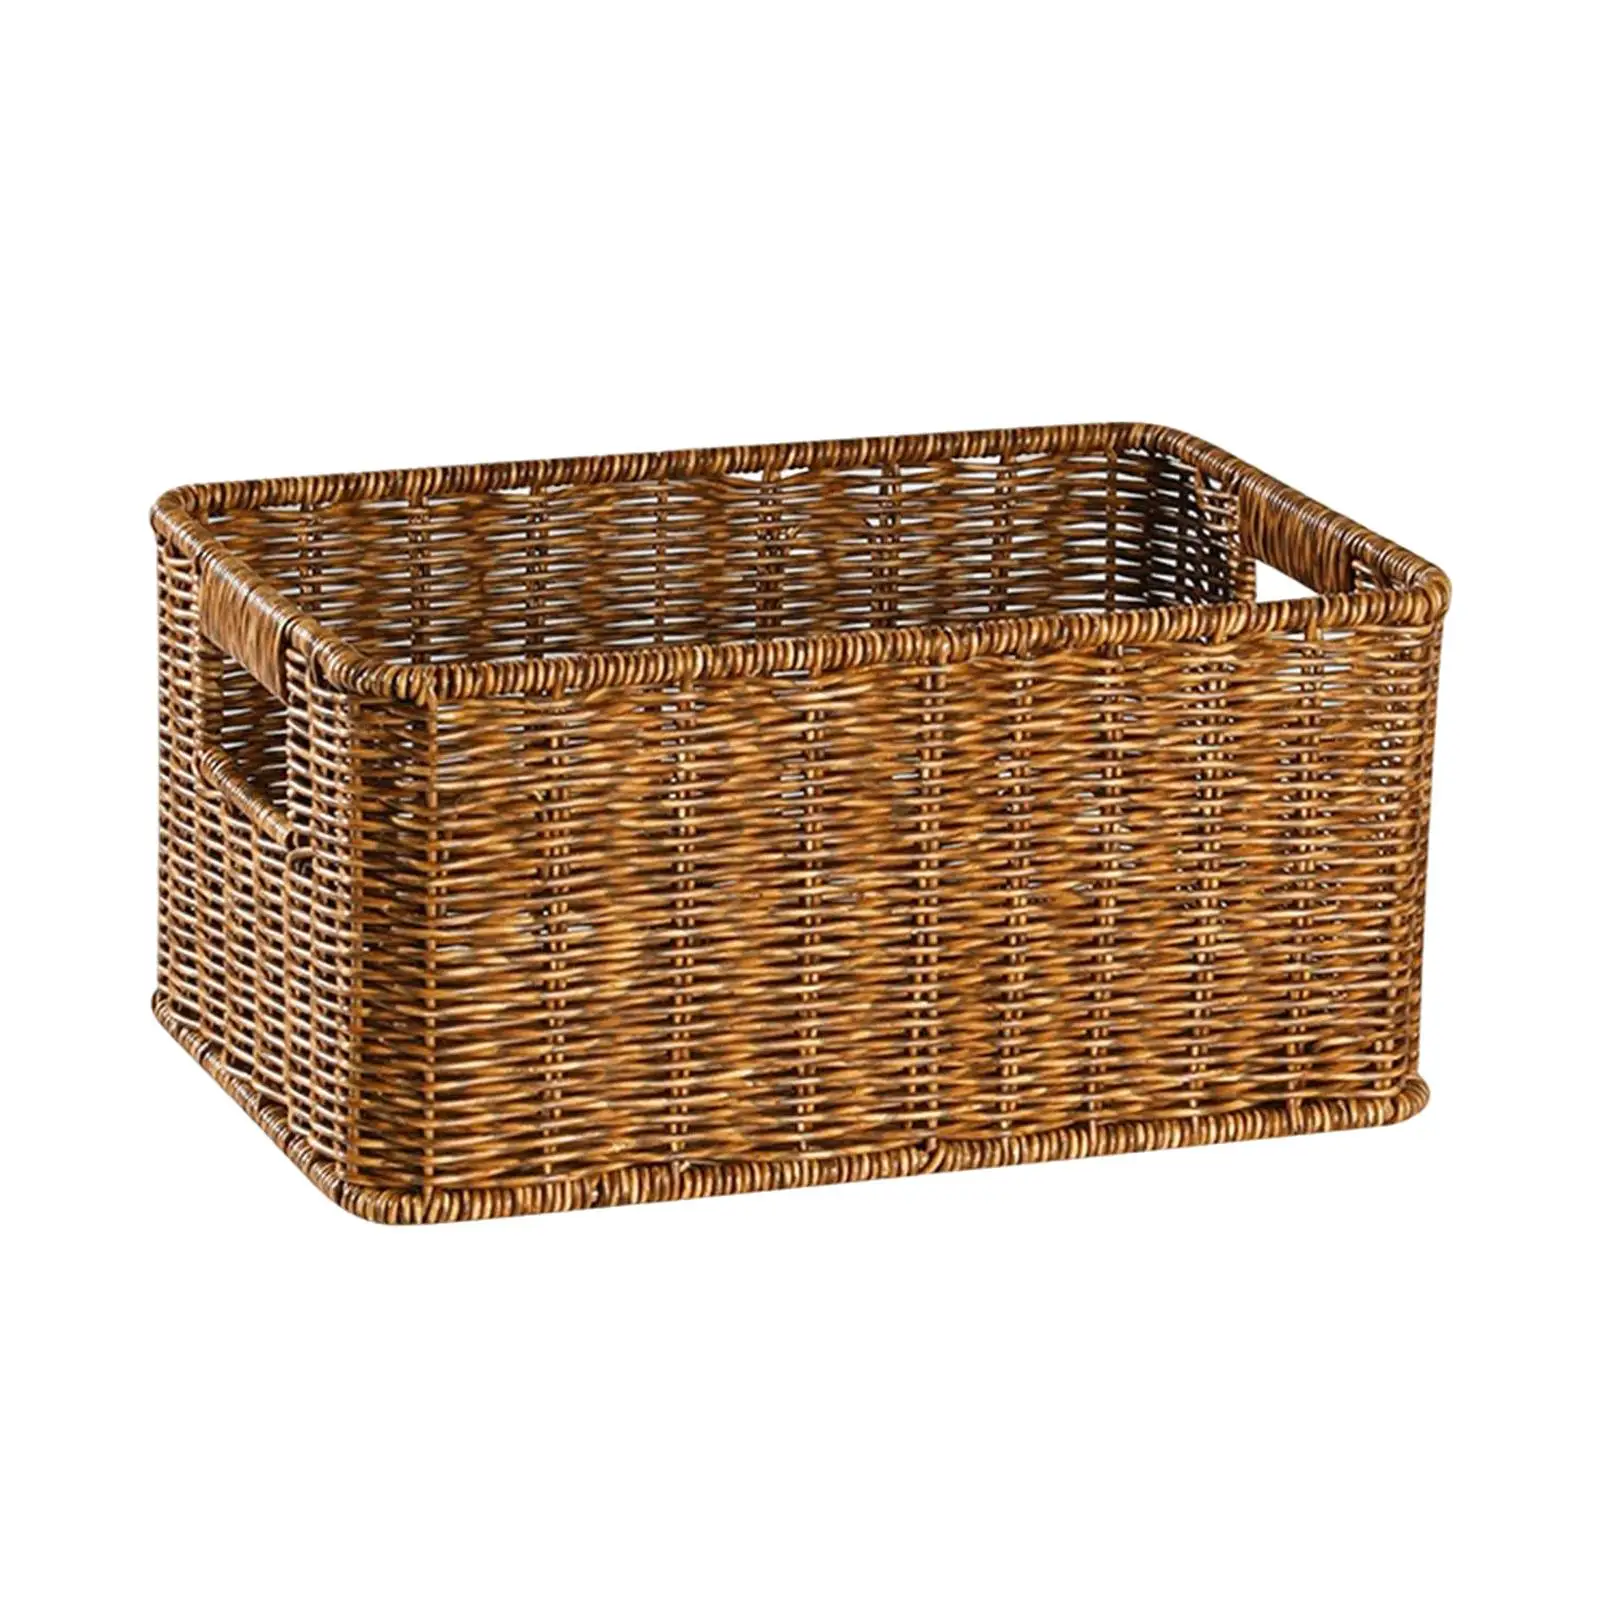 Hand Woven Storage Basket Built in Handles for Bathroom, Kitchen Handcrafted